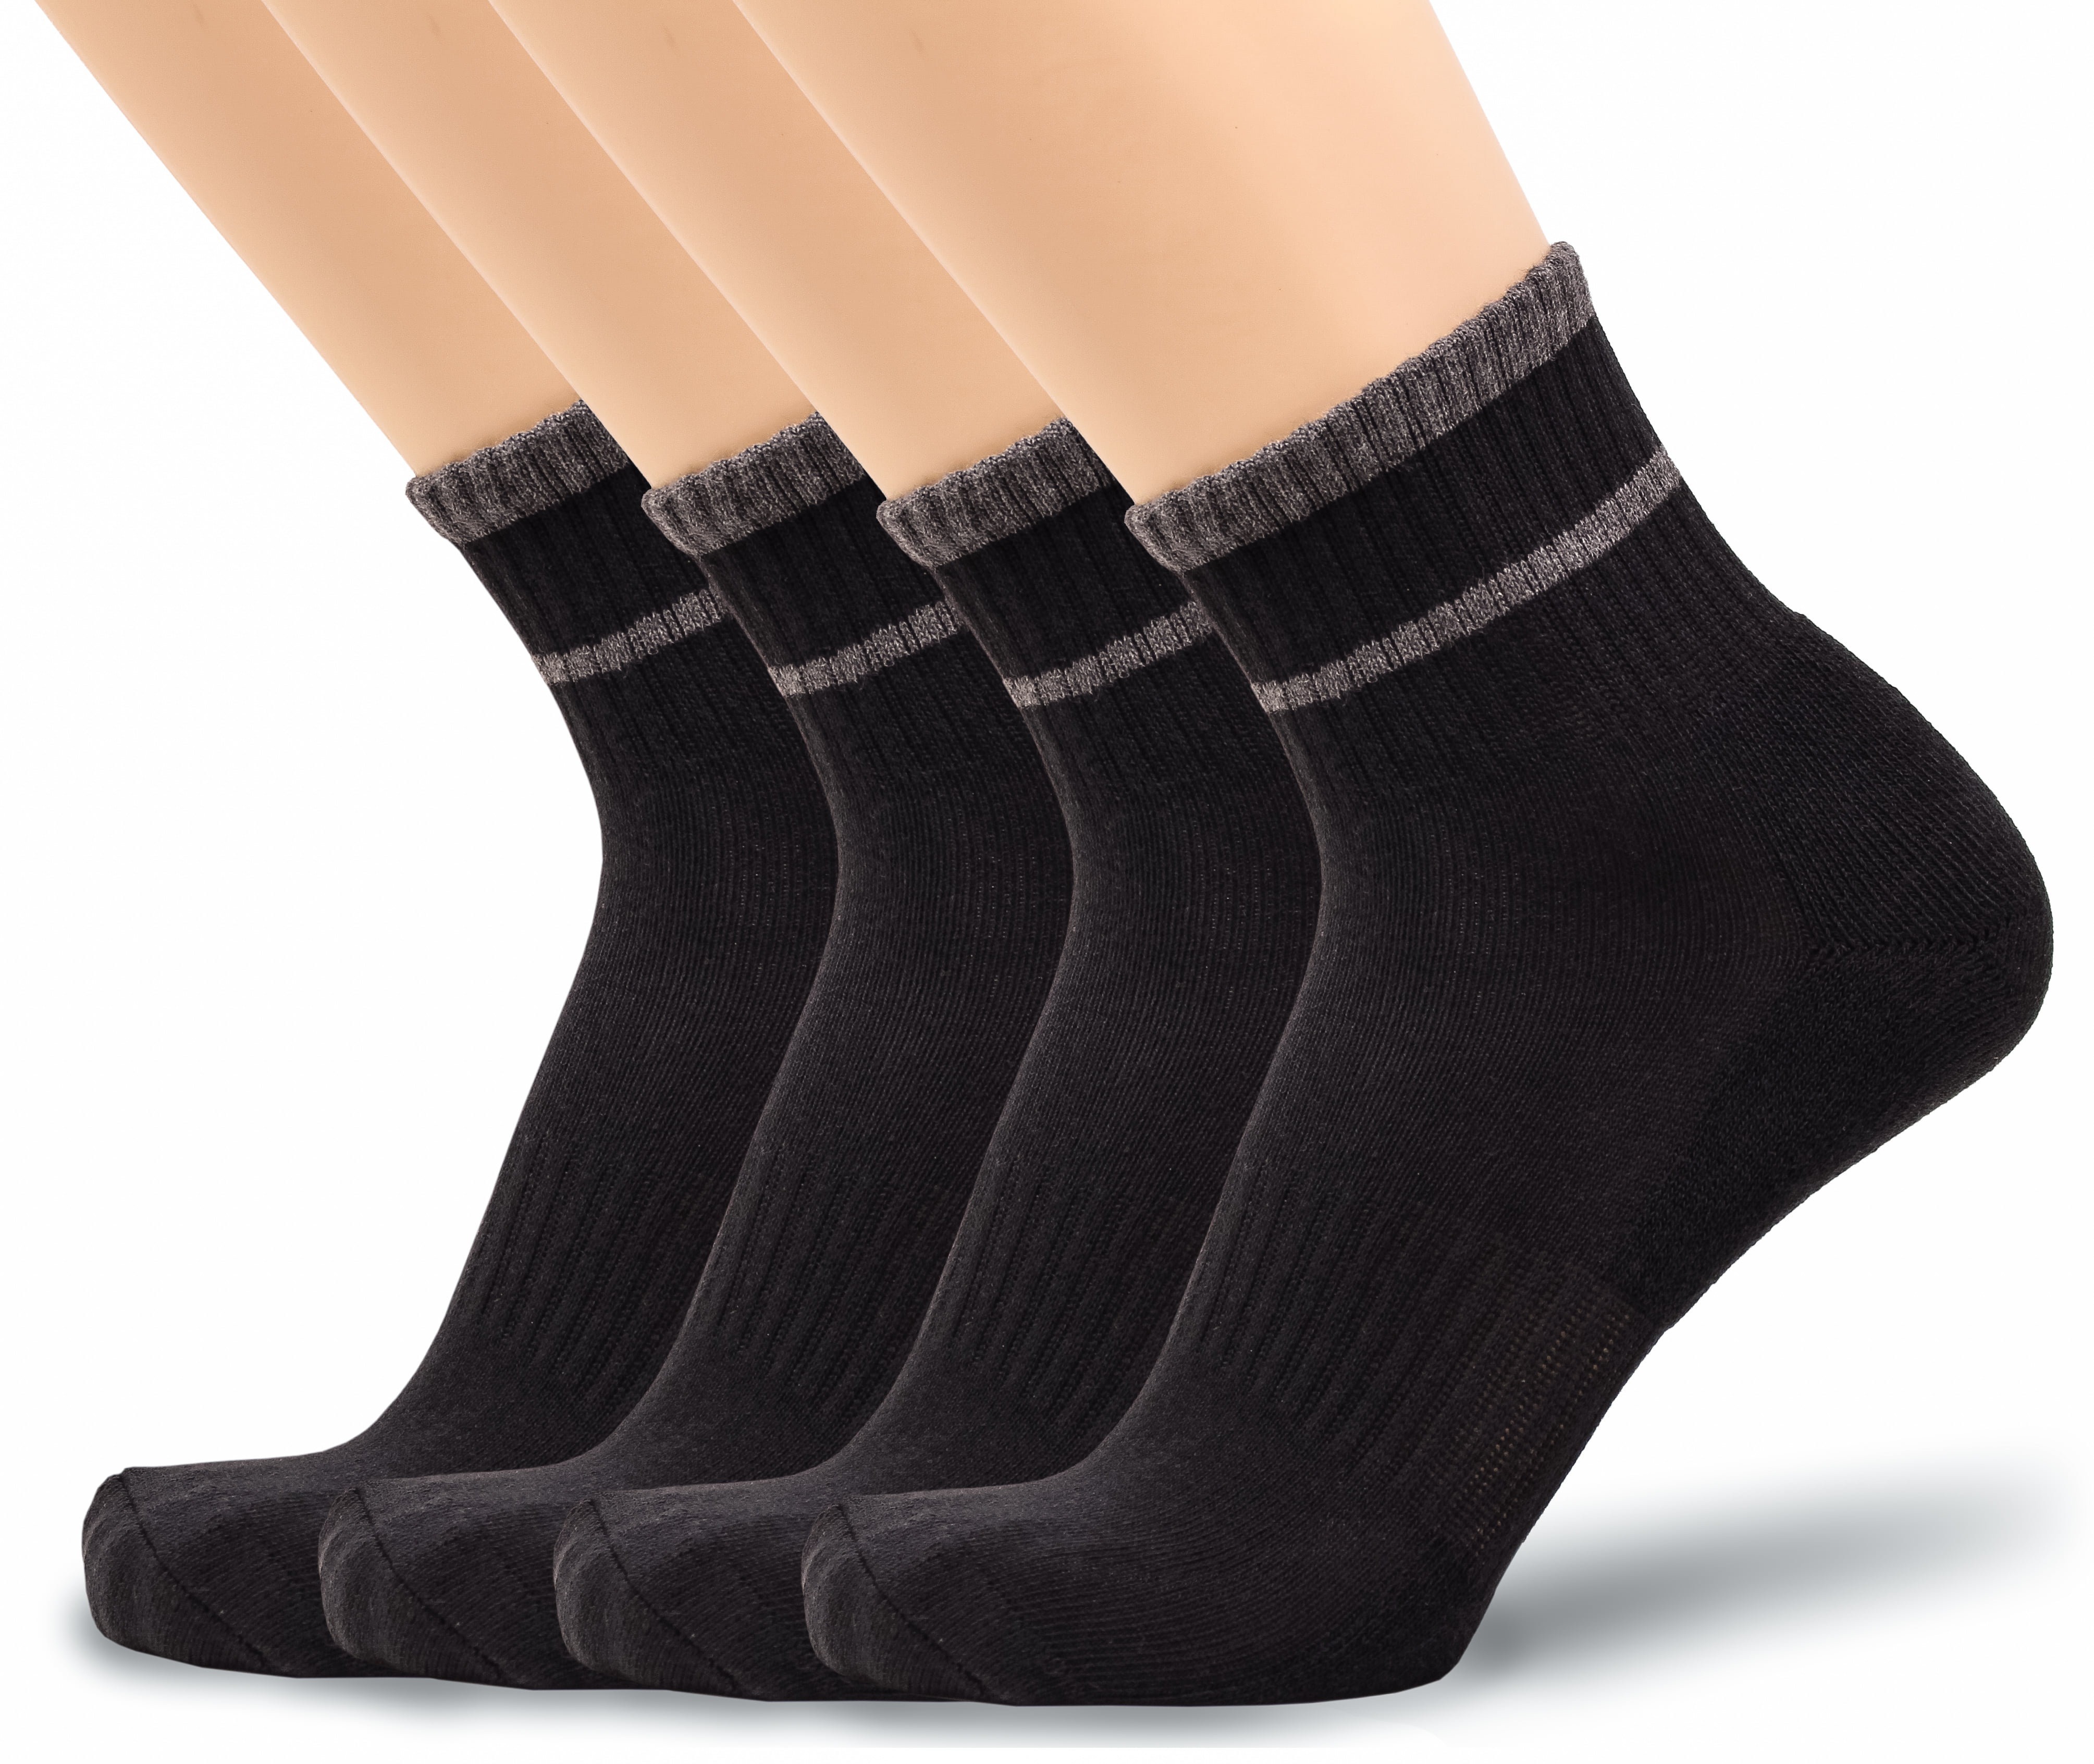 u&i Men's Performance Cotton Mid Cut Quarter Athletic Socks (4-Pack ...